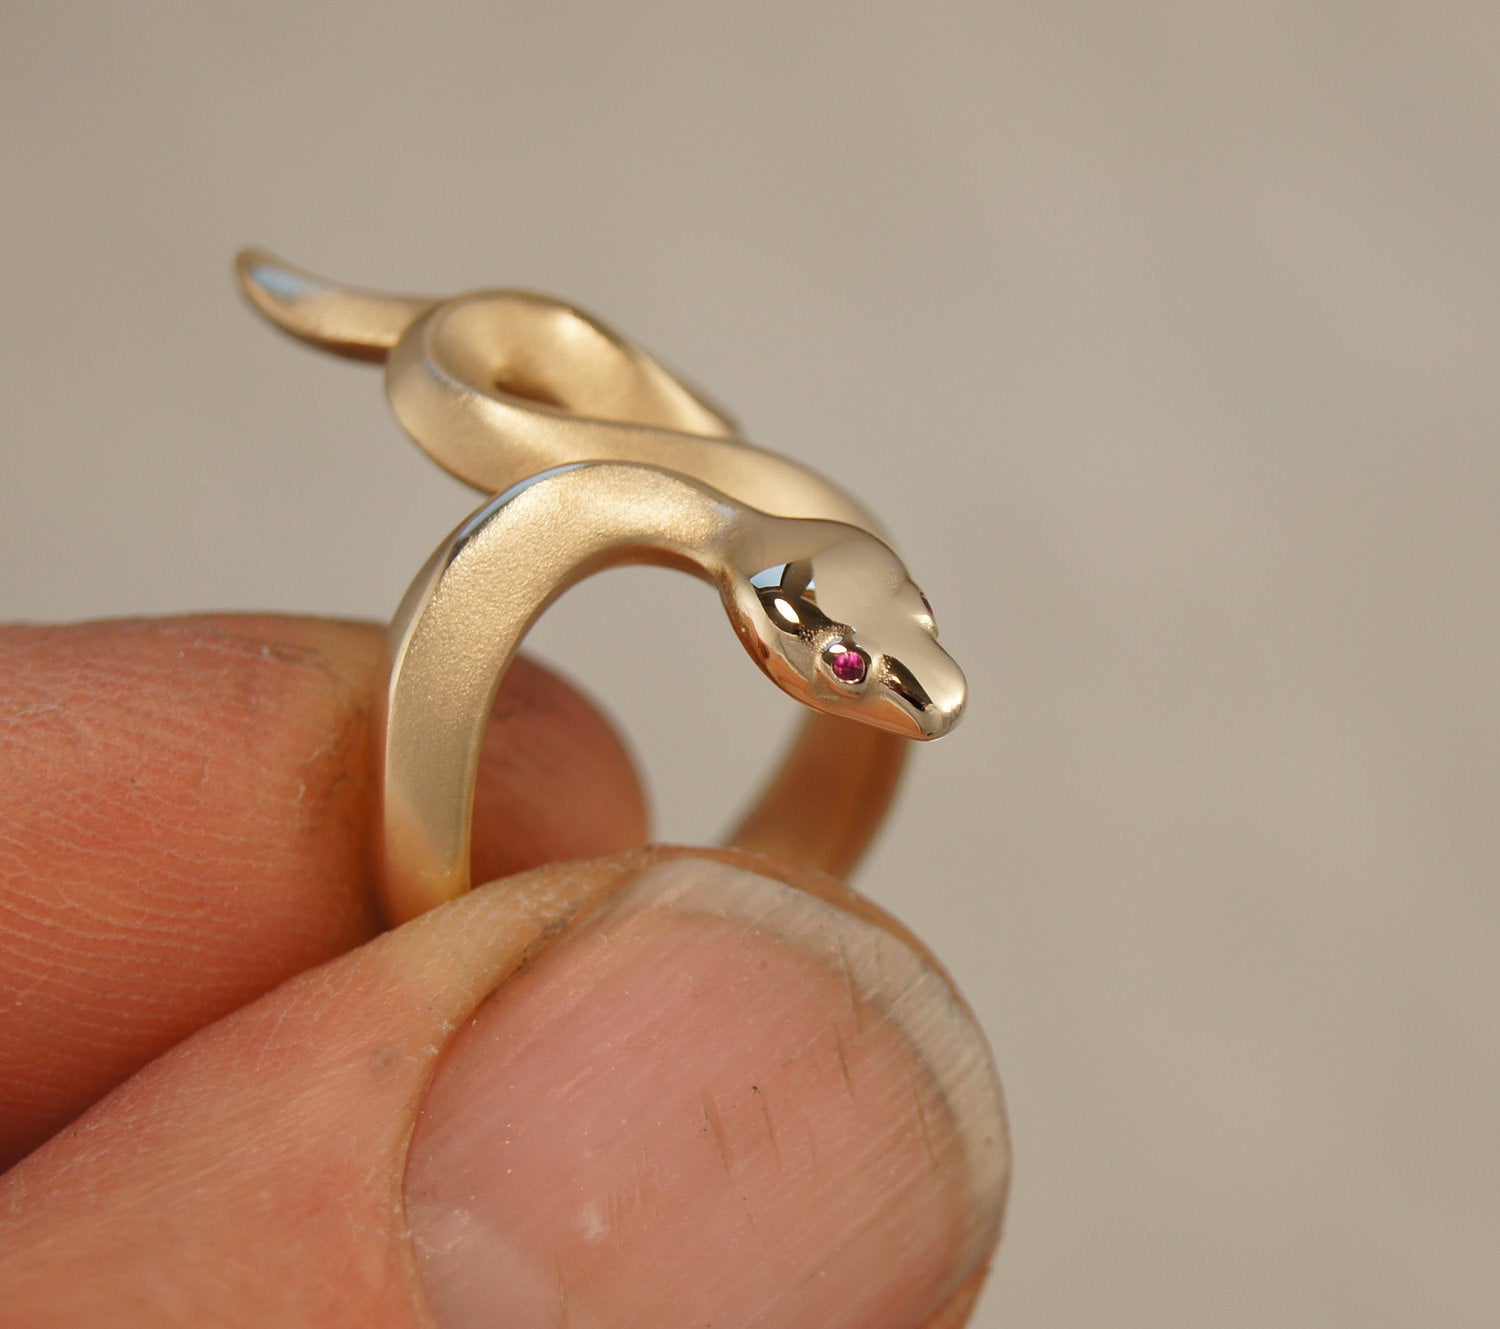 boa snake ring, bronze, ruby or blue sapphire eyes